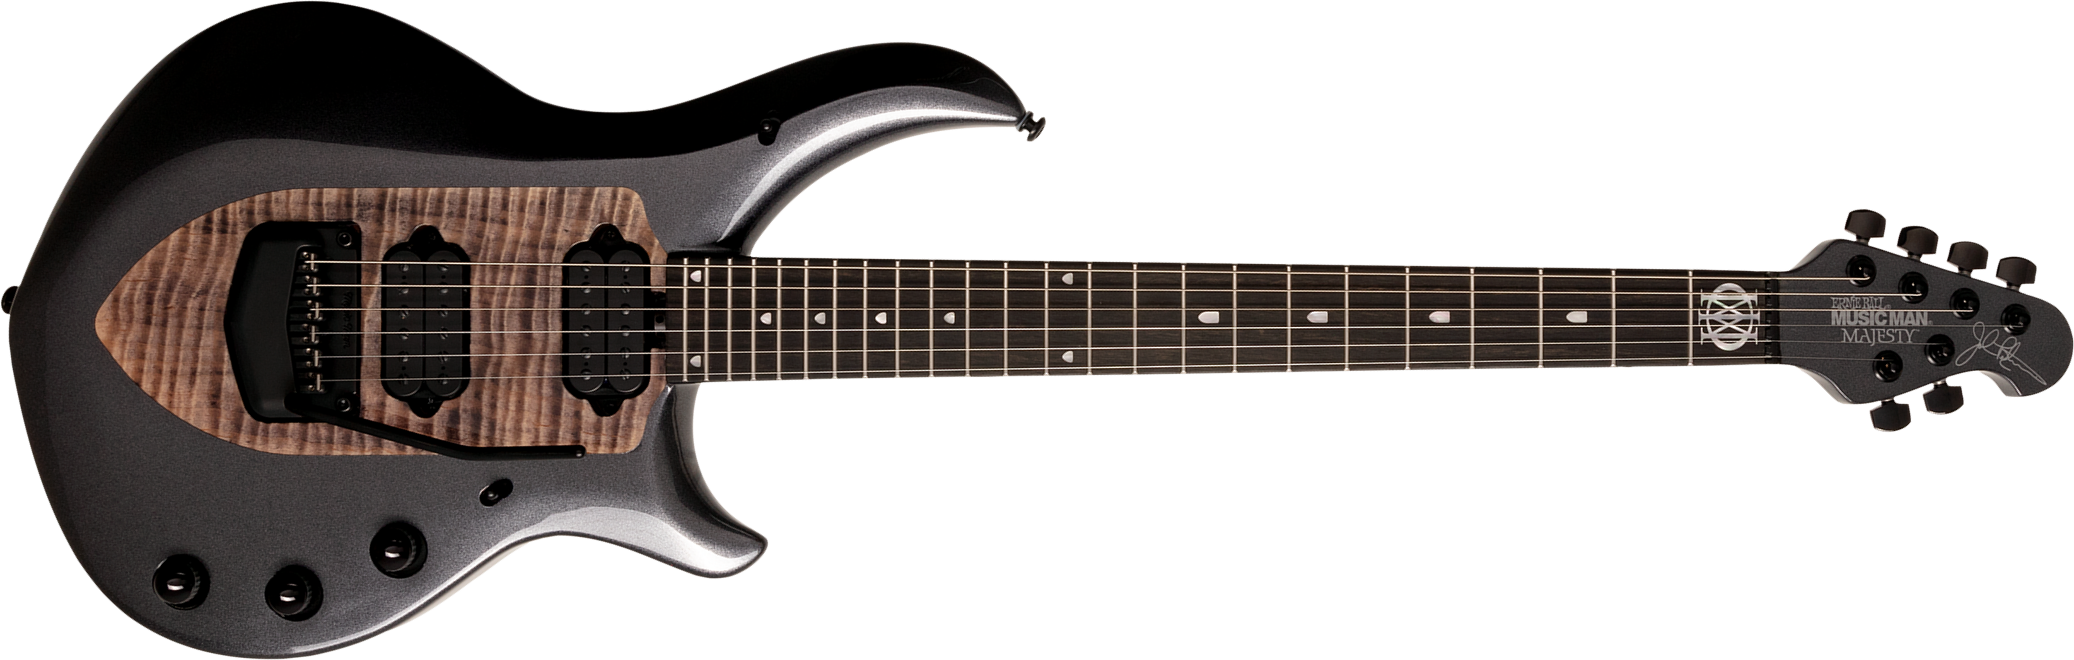 Music Man John Petrucci Majesty 6 Signature 2h Dimarzio Piezo Trem - Smoked Pearl - Guitarra electrica metalica - Main picture